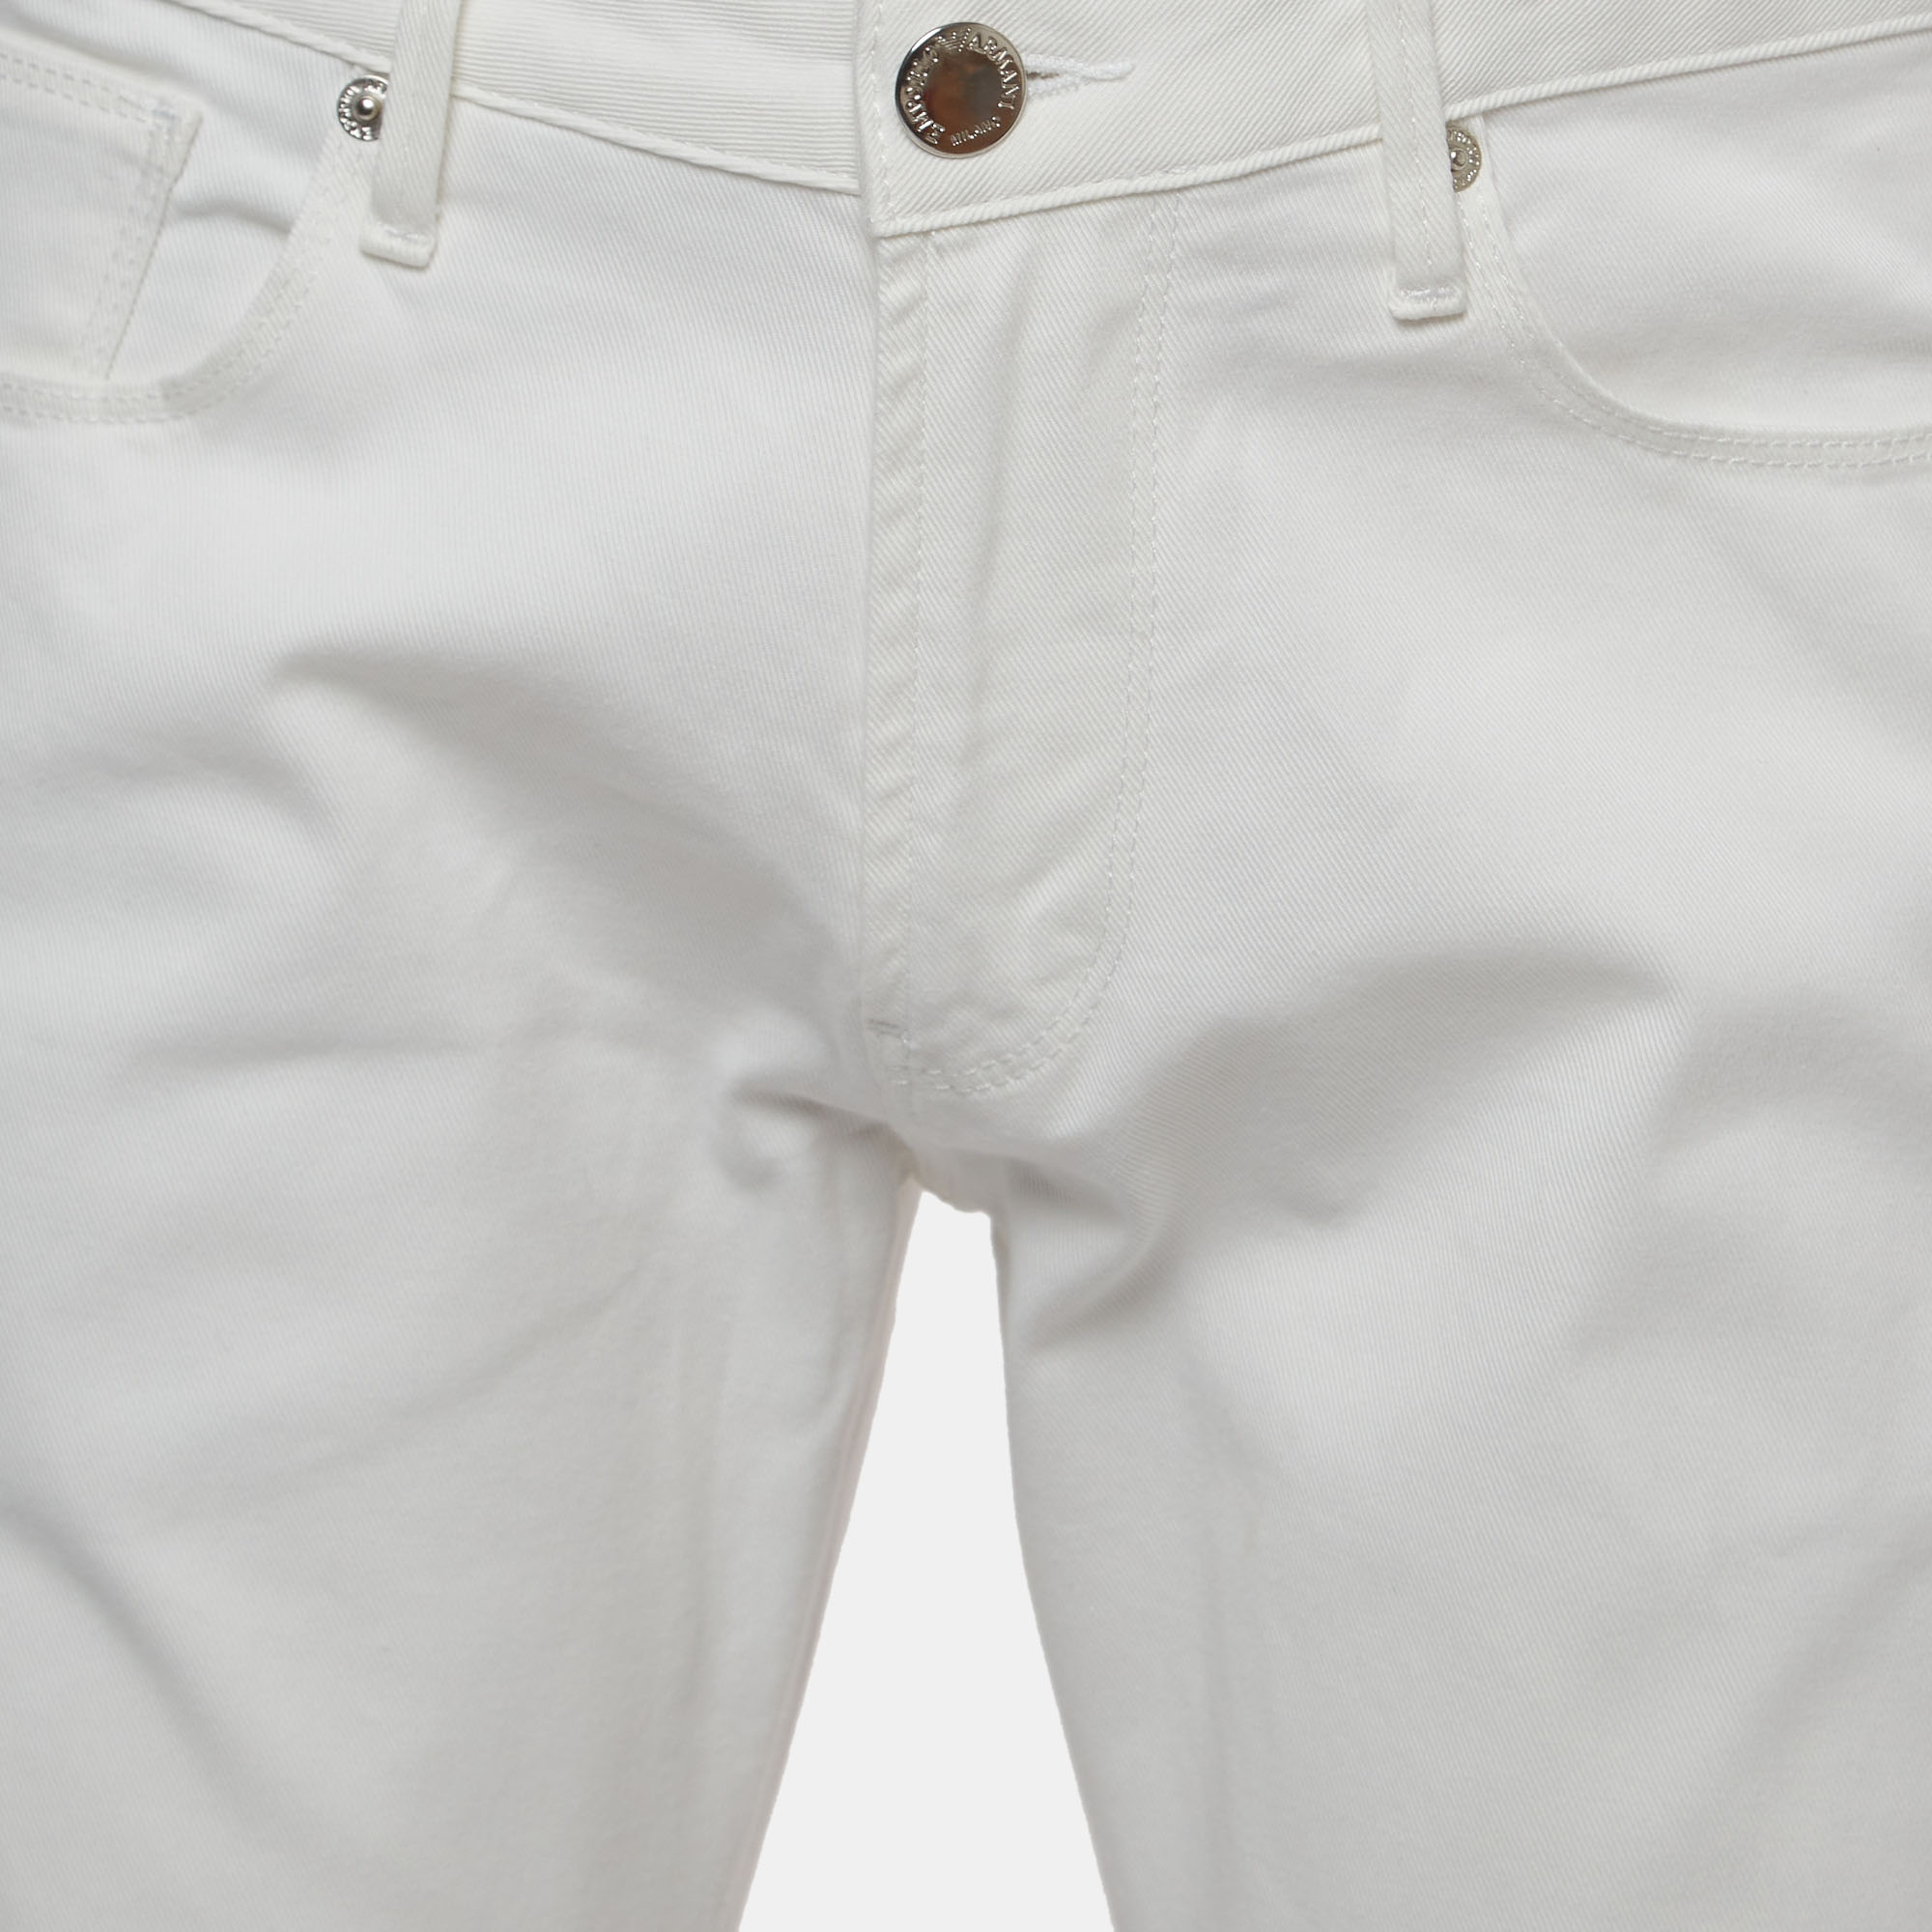 Emporio Armani White Denim Slim Fit Jeans L/Waist 34.5